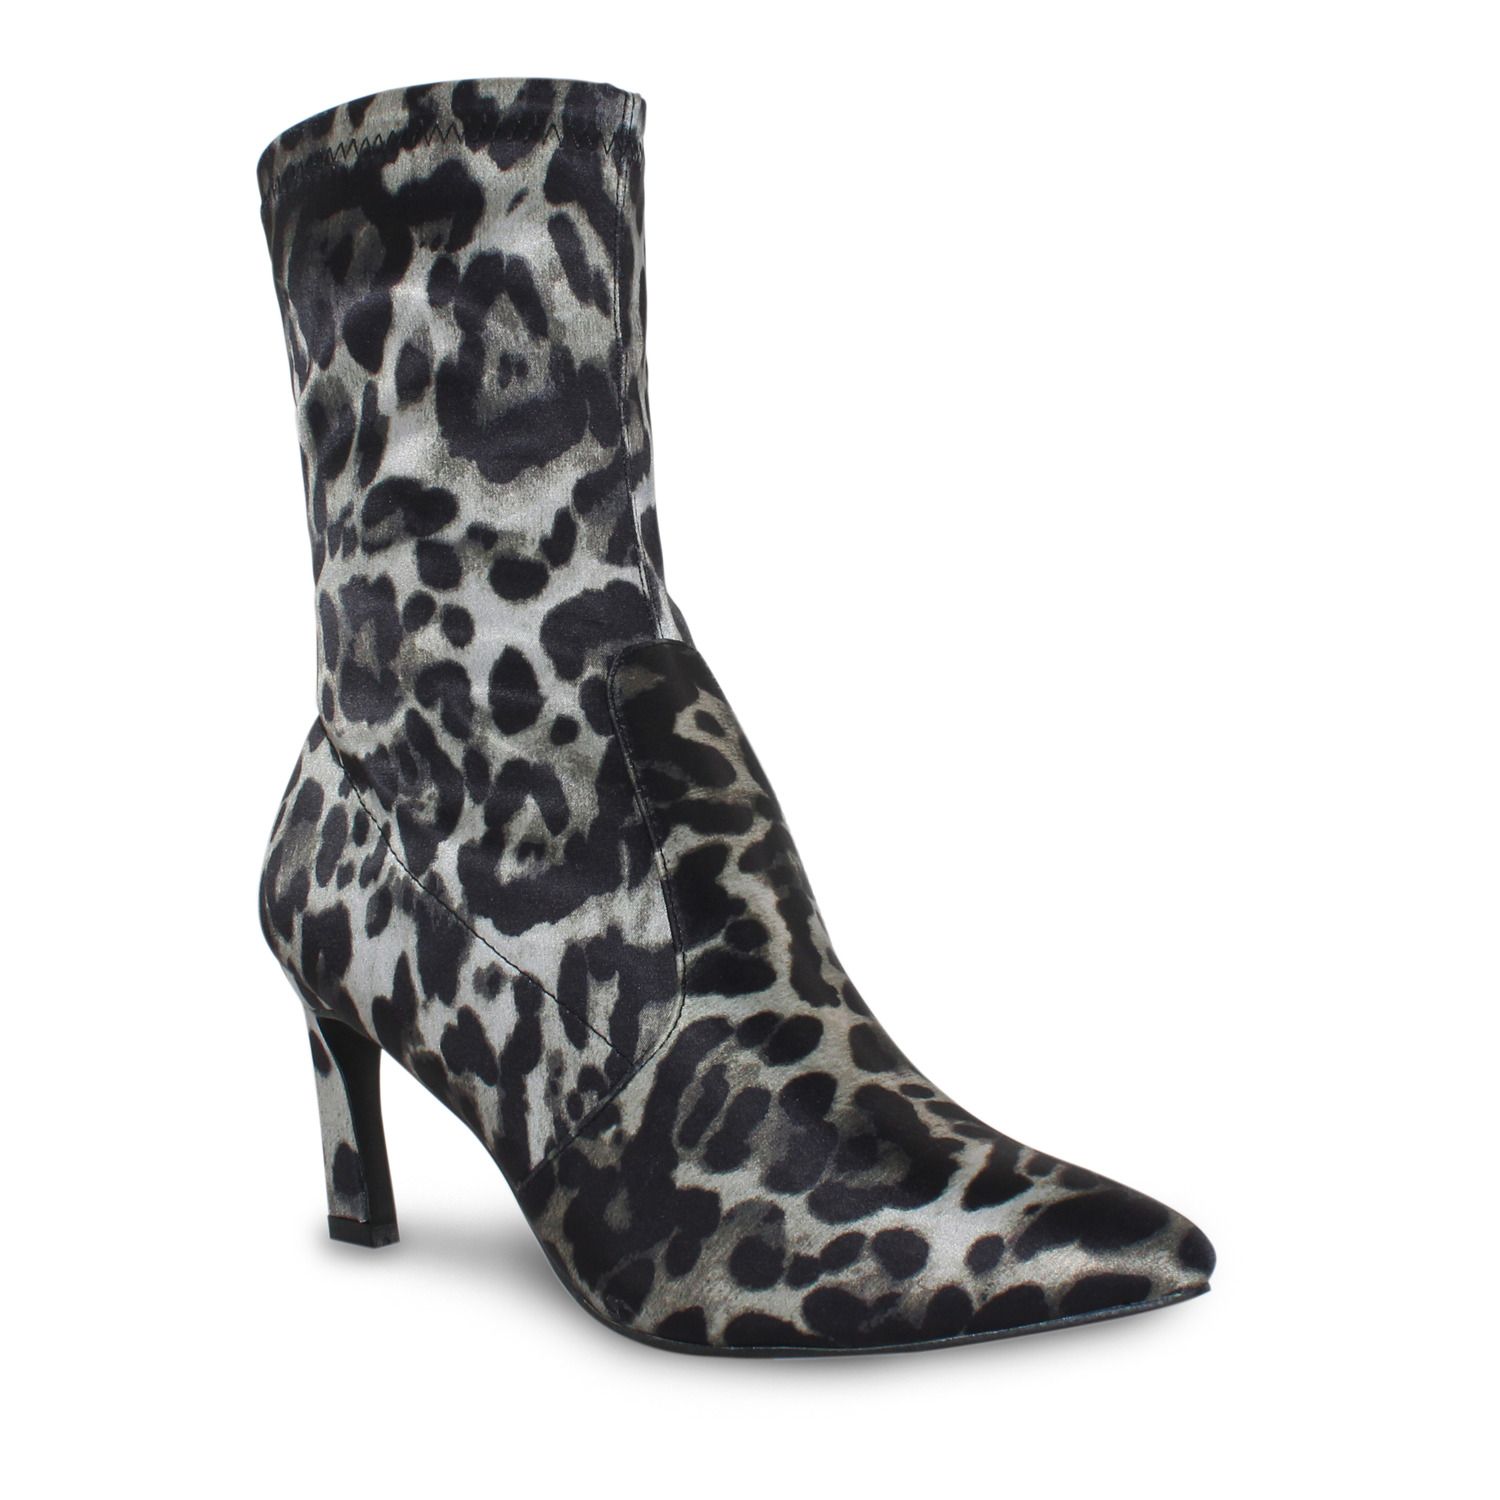 kohls leopard boots